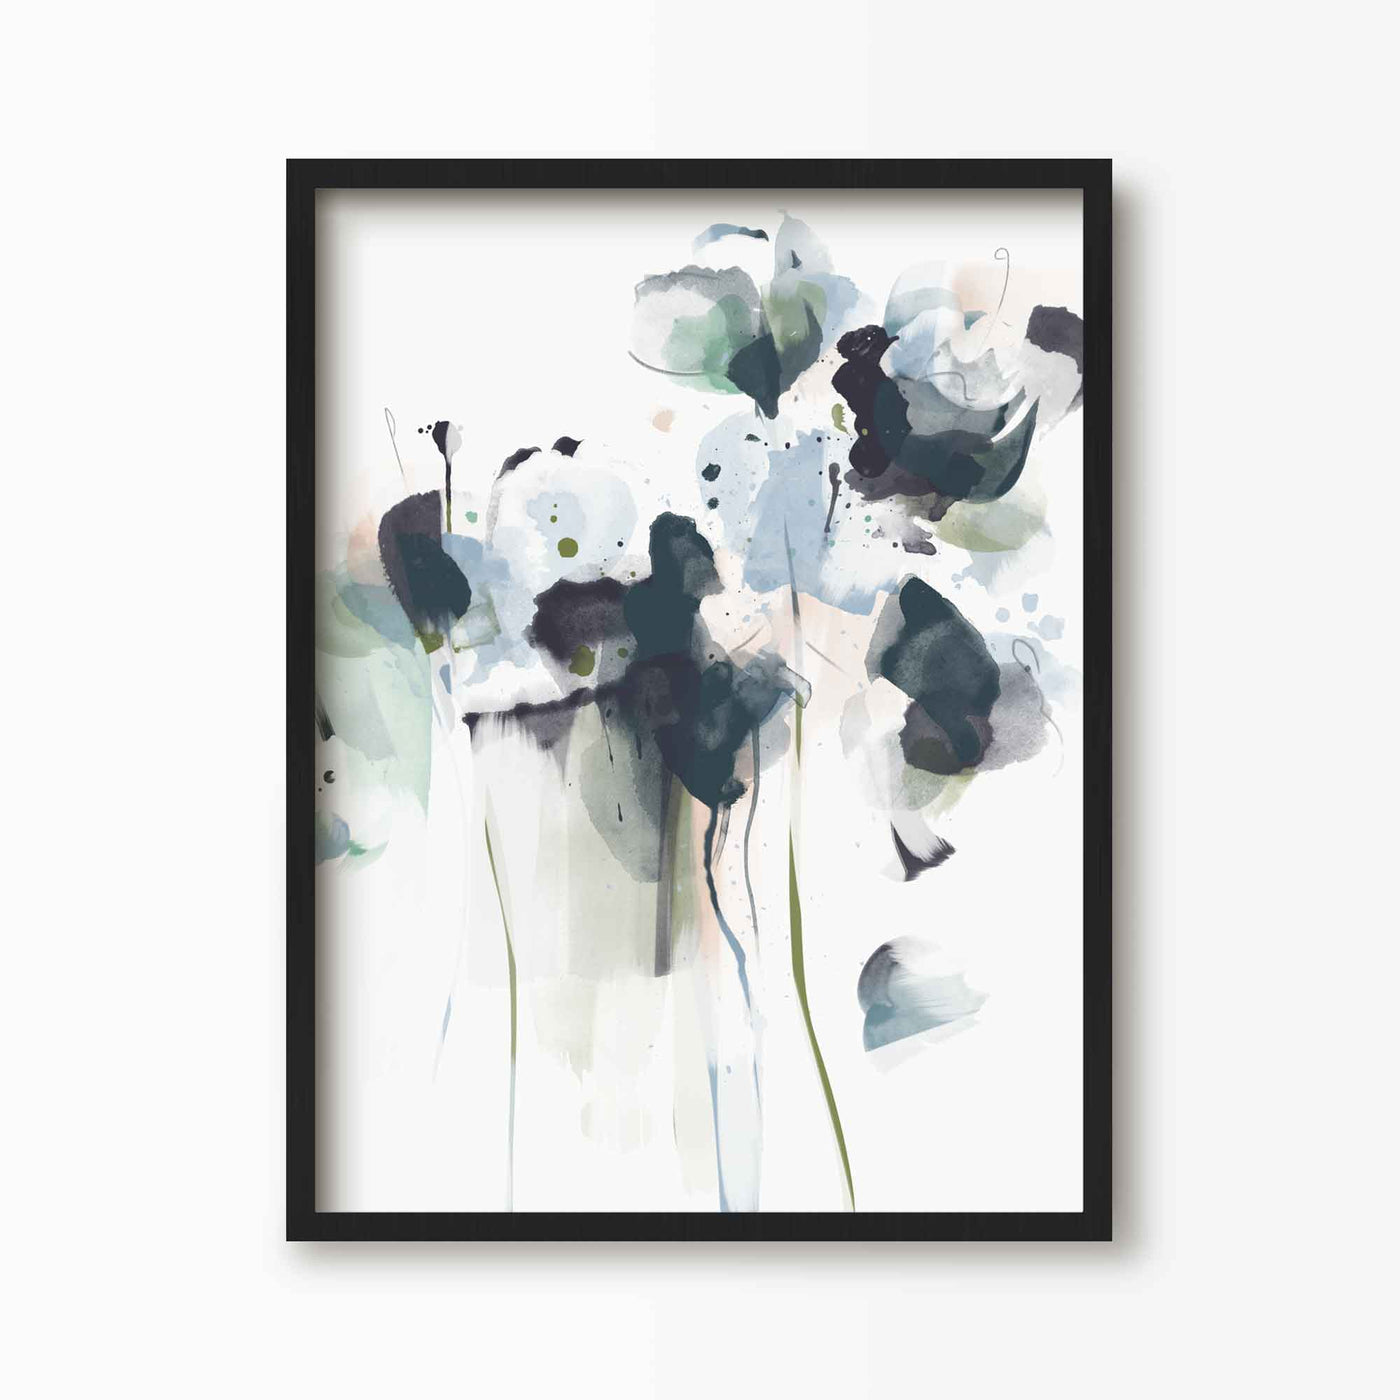 Green Lili 30x40cm (12x16") / Black Frame Midnight Blue Abstract Floral Print